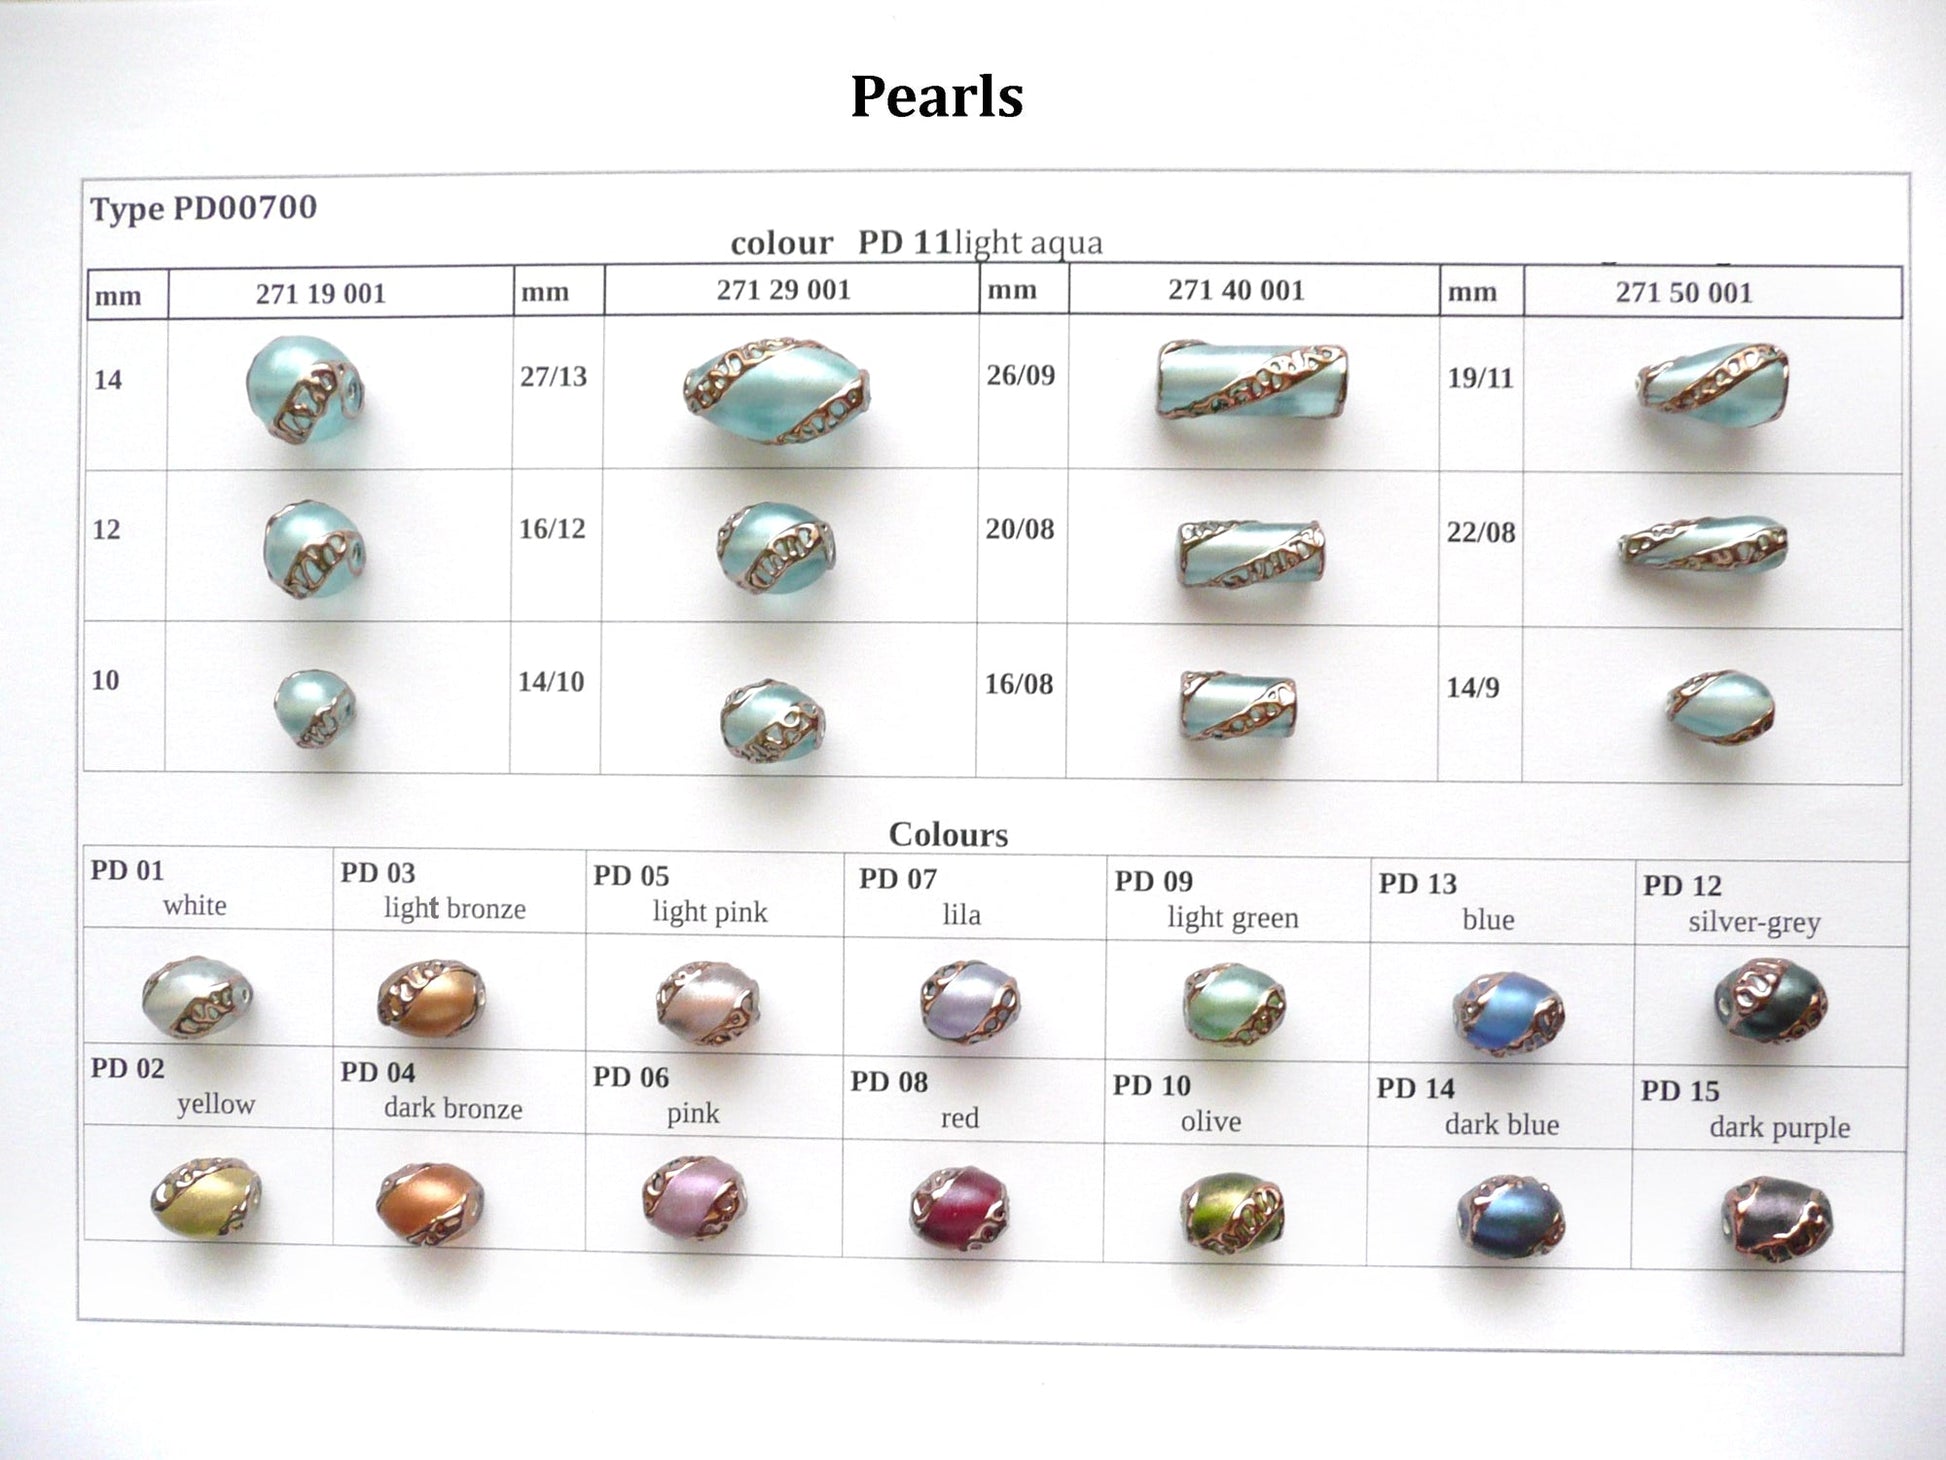 30 pcs Lampwork Beads Pearl Decor PD700 / Round (271-19-001), Handmade, Preciosa Glass, Czech Republic